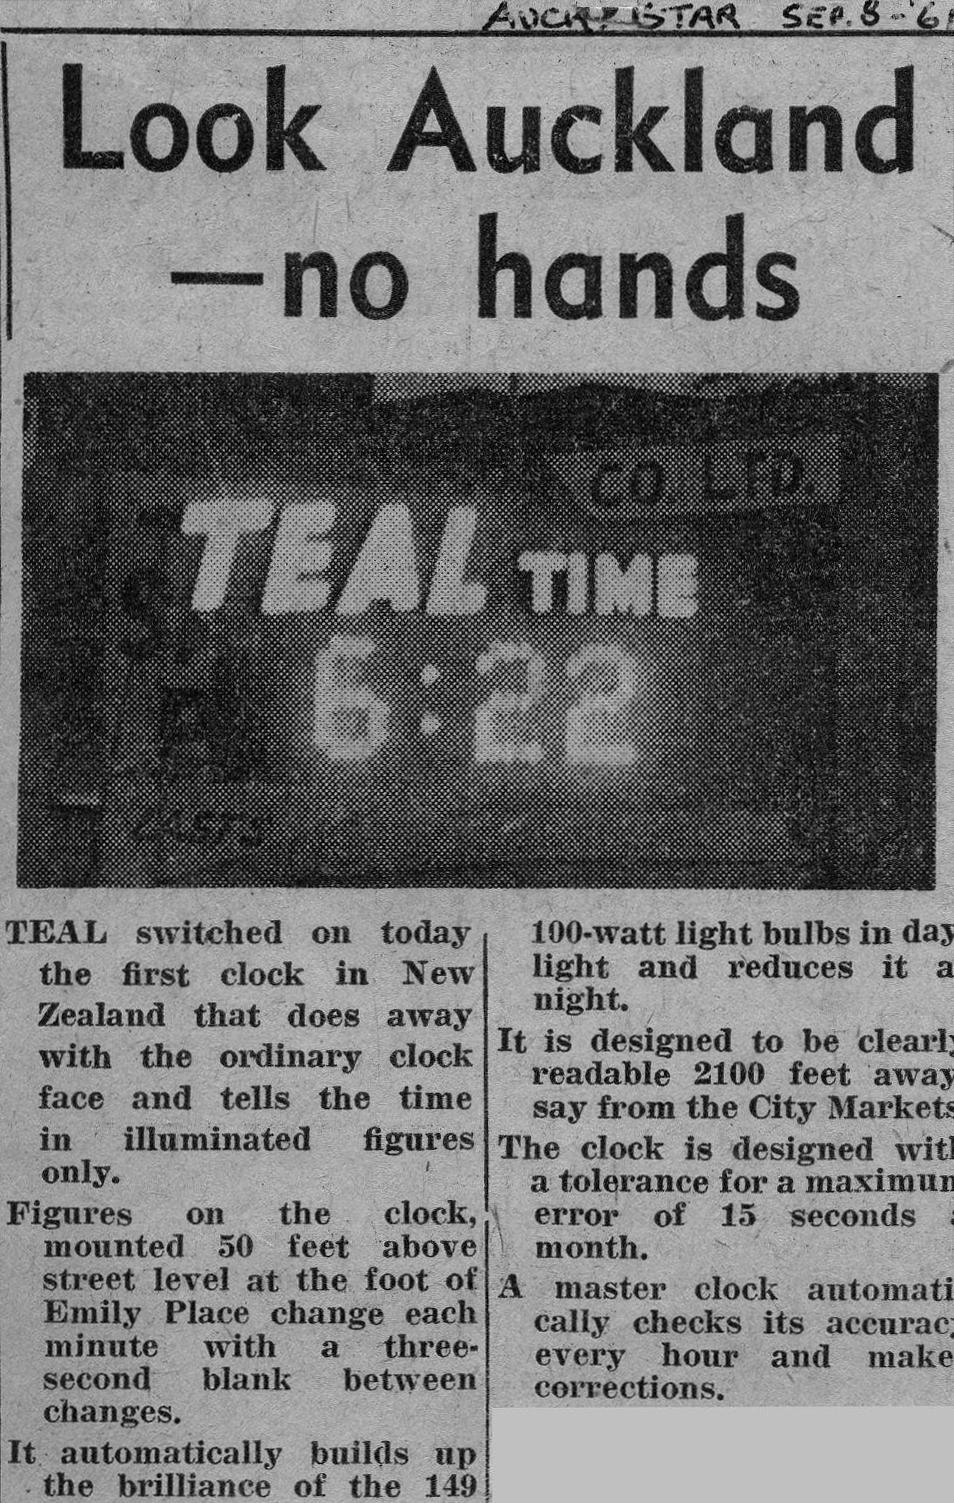 Auckland Star Sept 8 1961